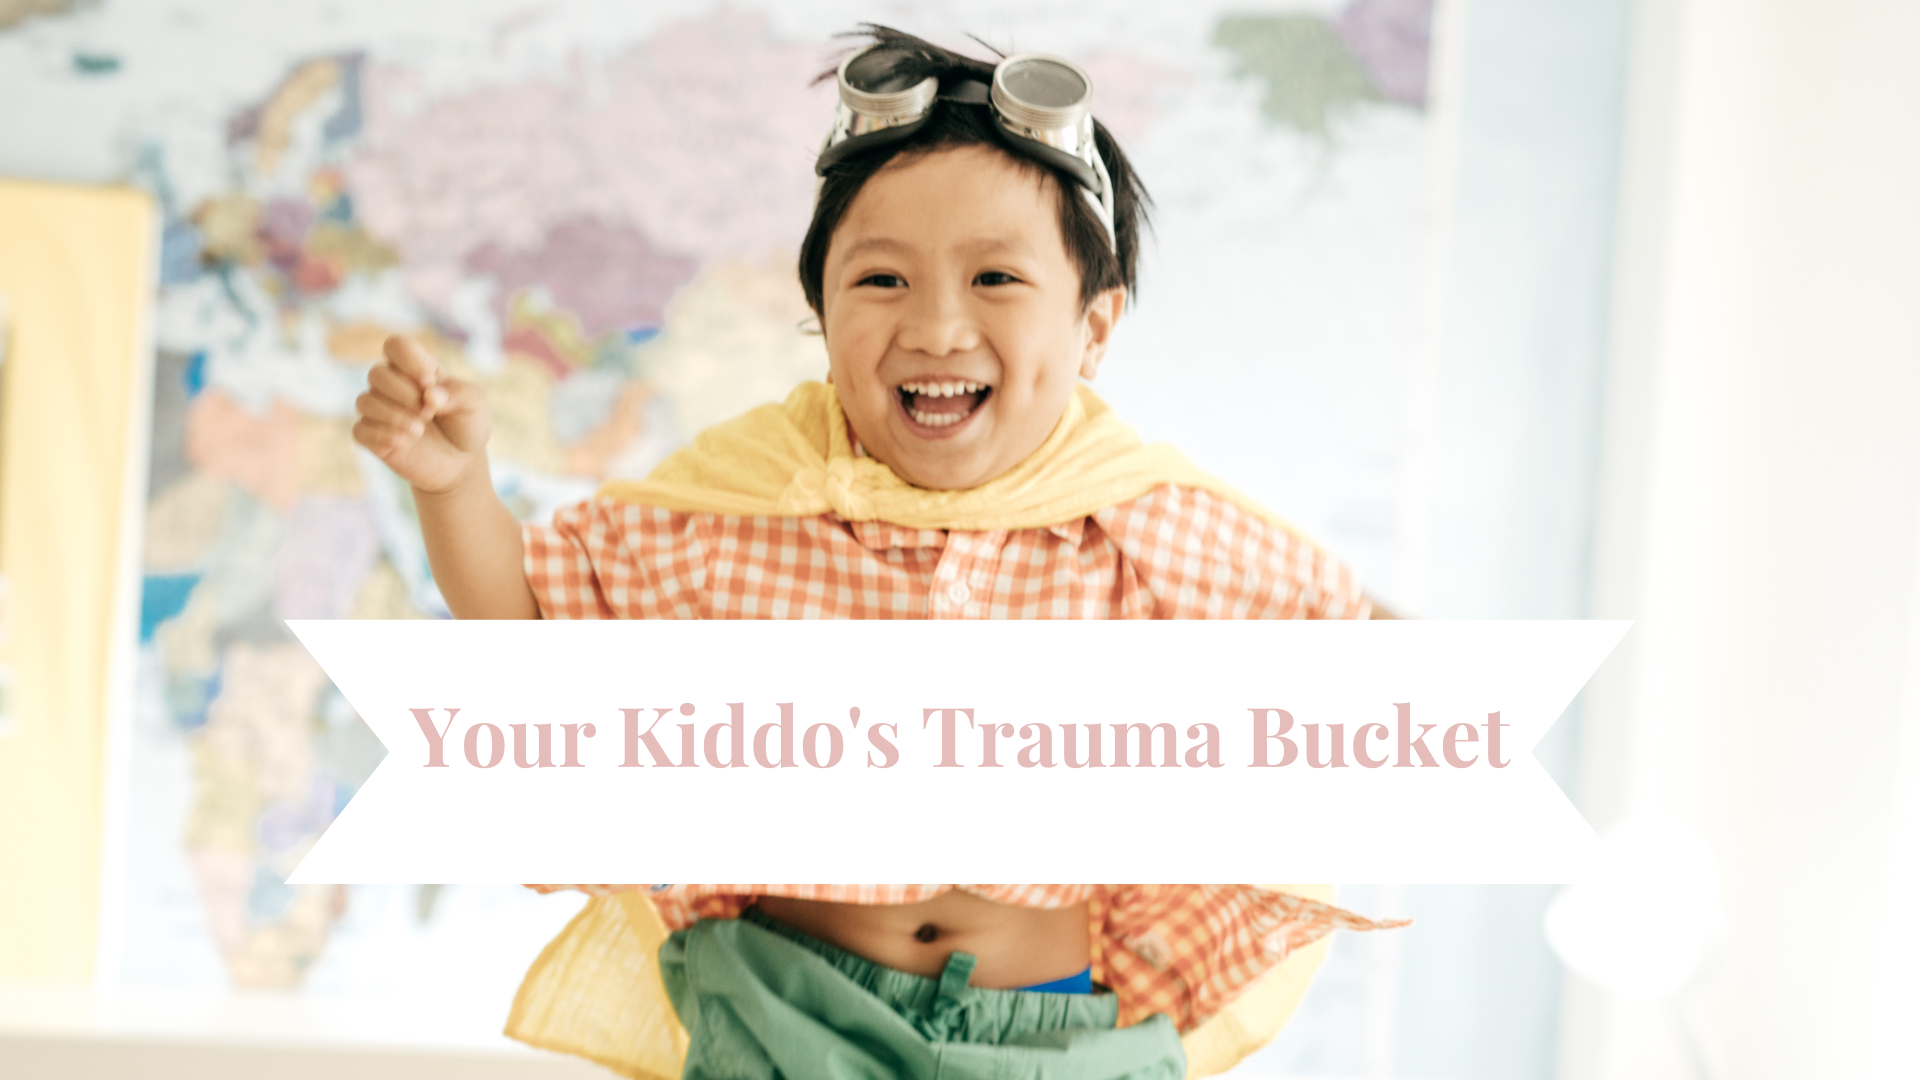 Understanding The Levels Of Your Kiddo’s Trauma Bucket